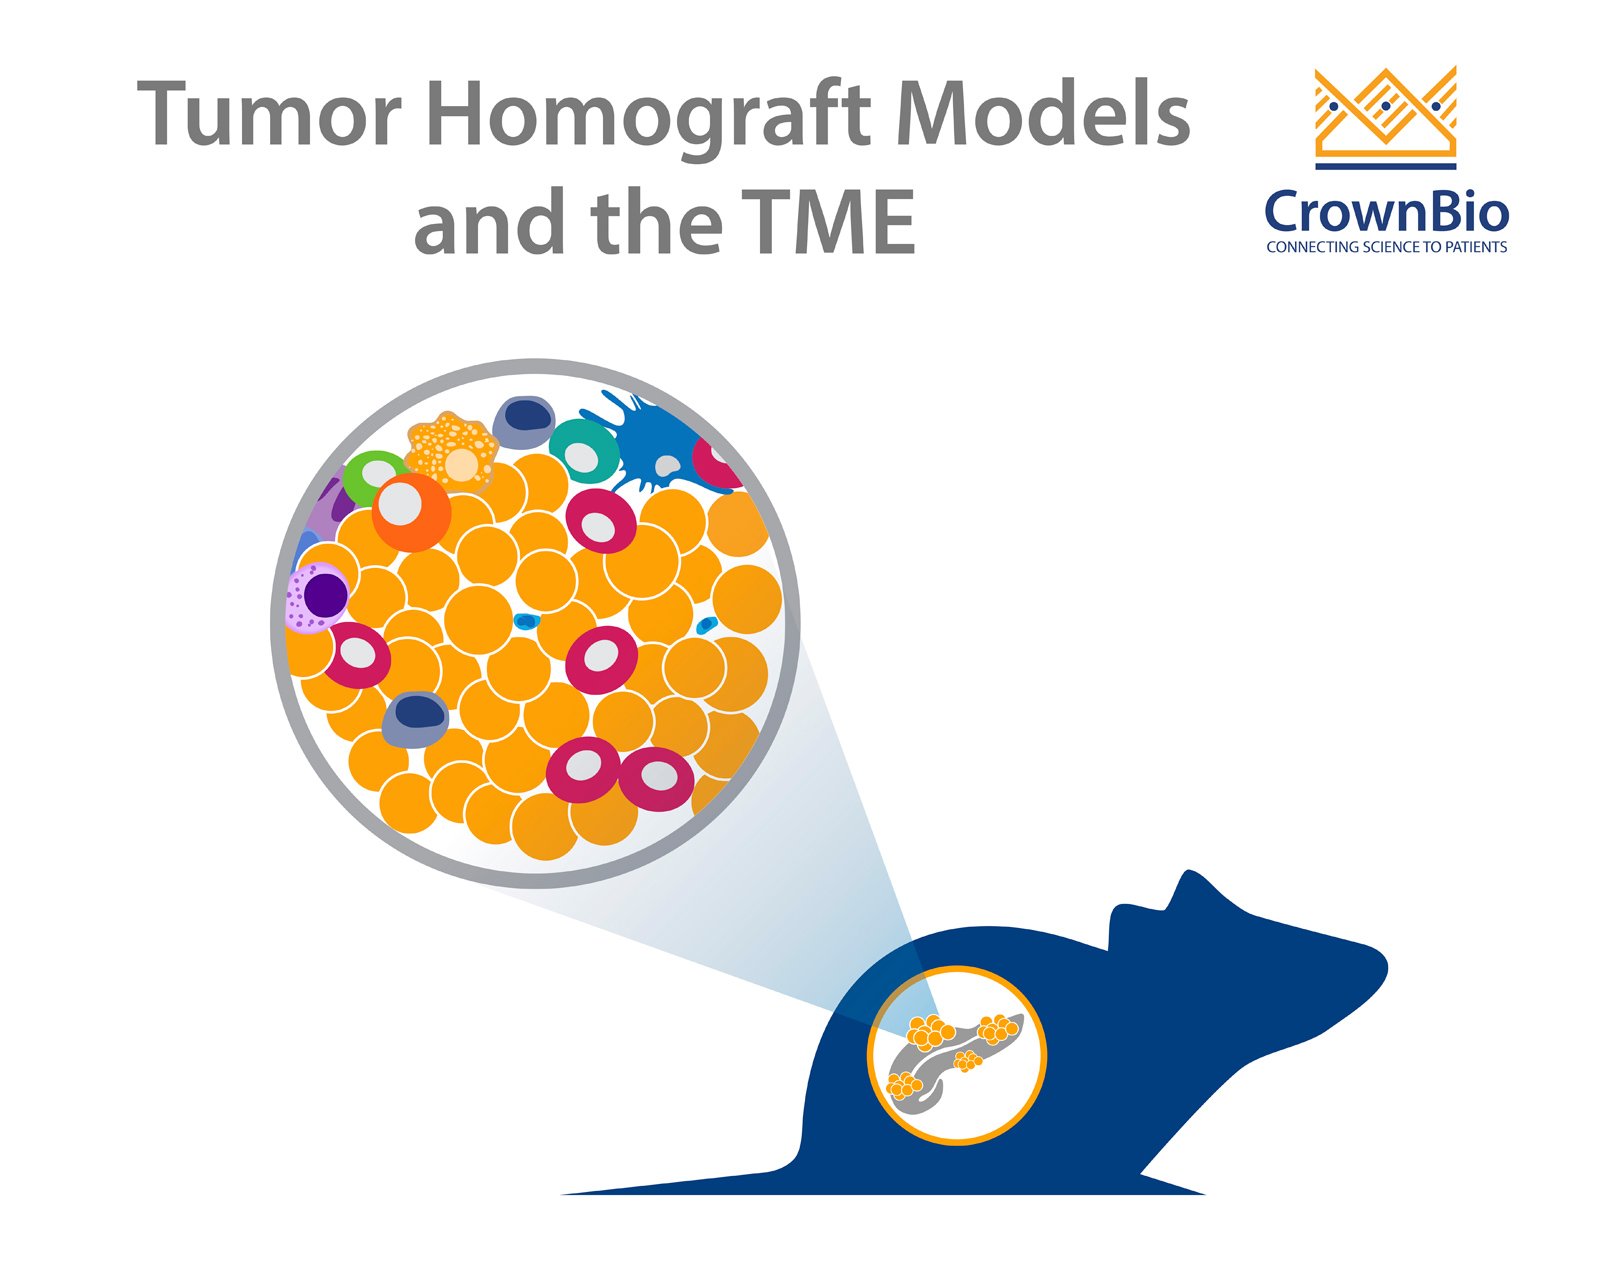 Orthotopic or Subcutaneous Tumor Homograft Models?